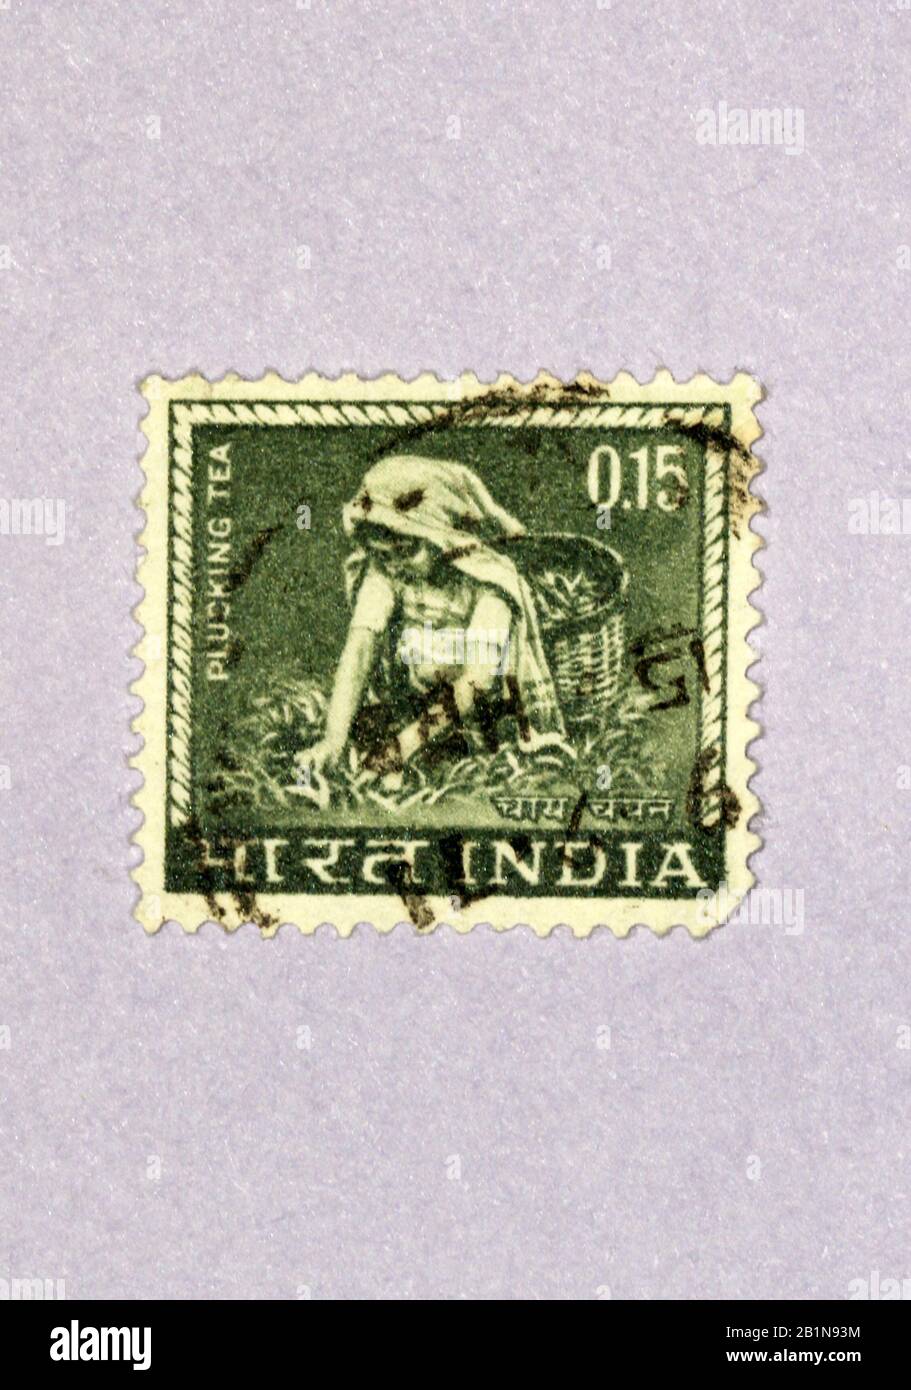 Desplume de té 1965 India, 0,15Rs Stock Photo